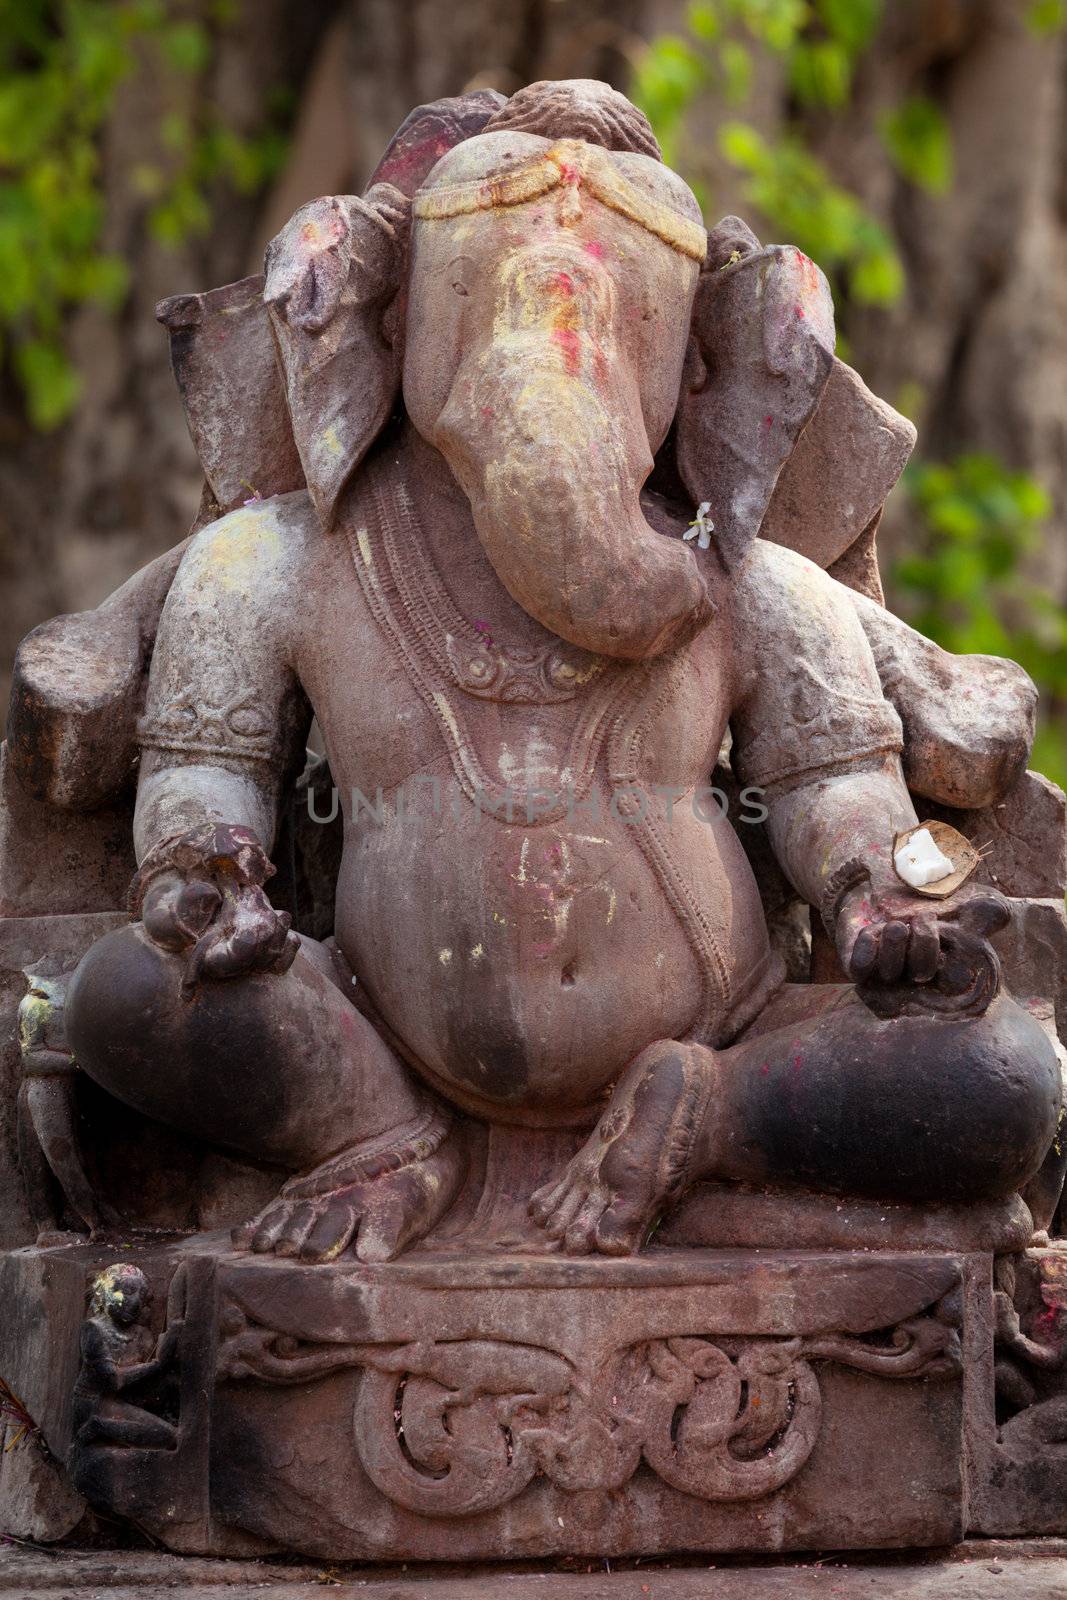 Ganesh image by dimol